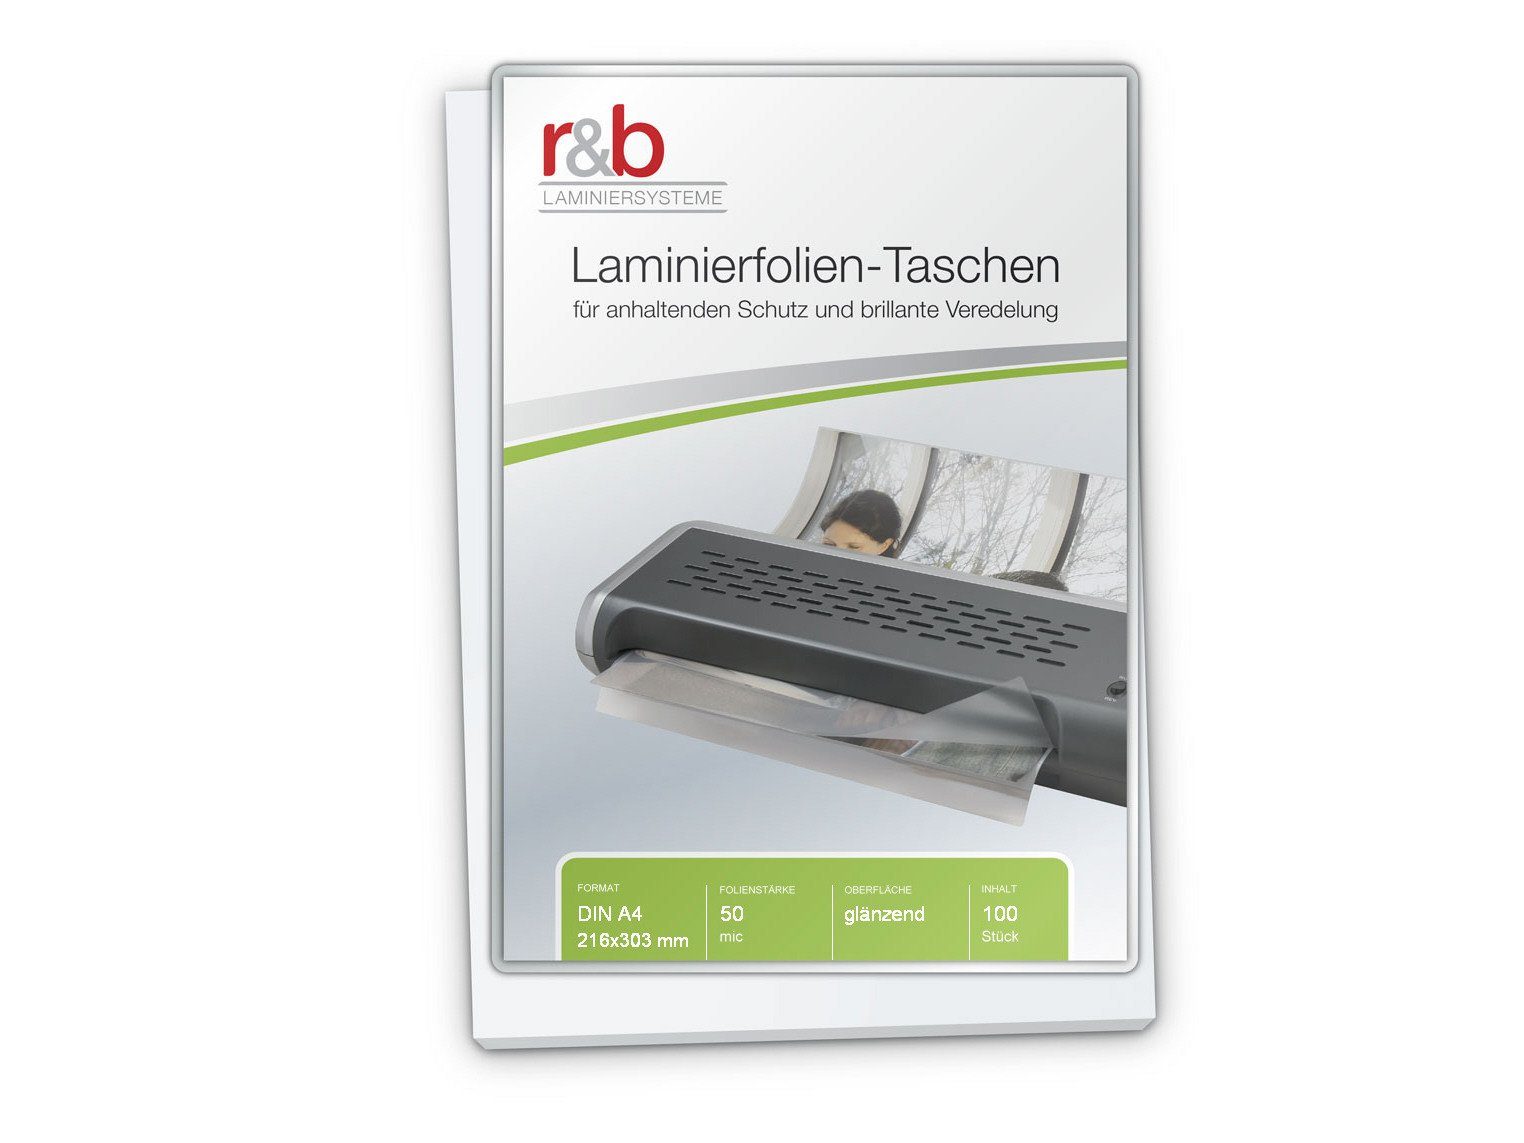 r&b Laminiersysteme Schutzfolie Laminierfolien A4 (216 x 303 mm), 2 x 50 mic, glänzend